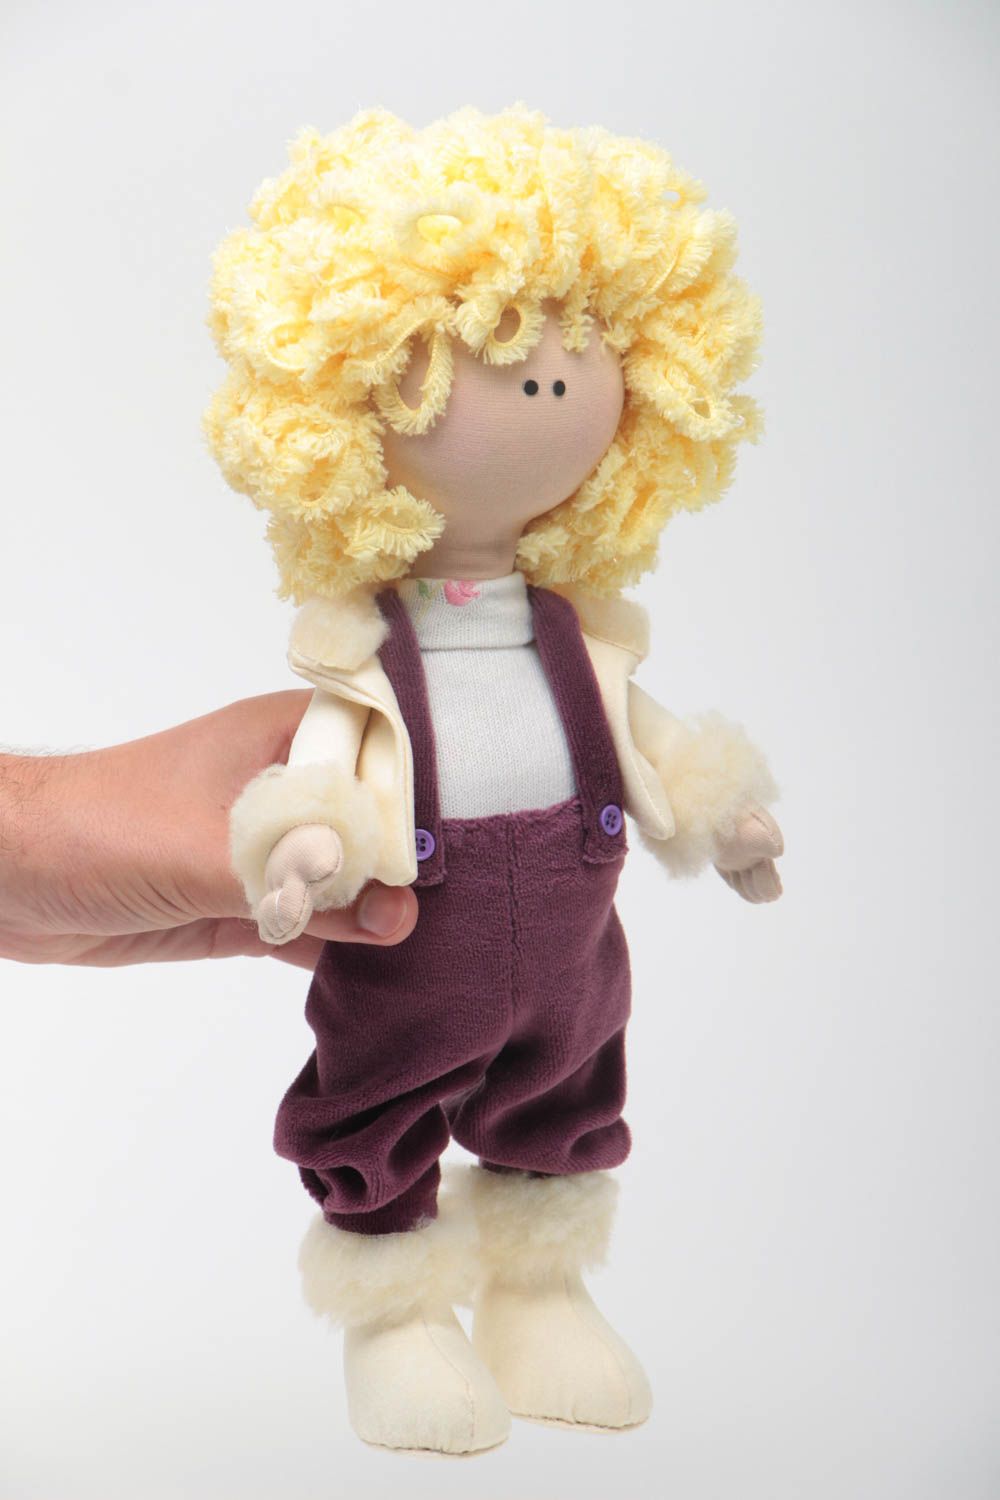 Handmade childrens rag doll textile stuffed toy interior decorating gift ideas photo 5